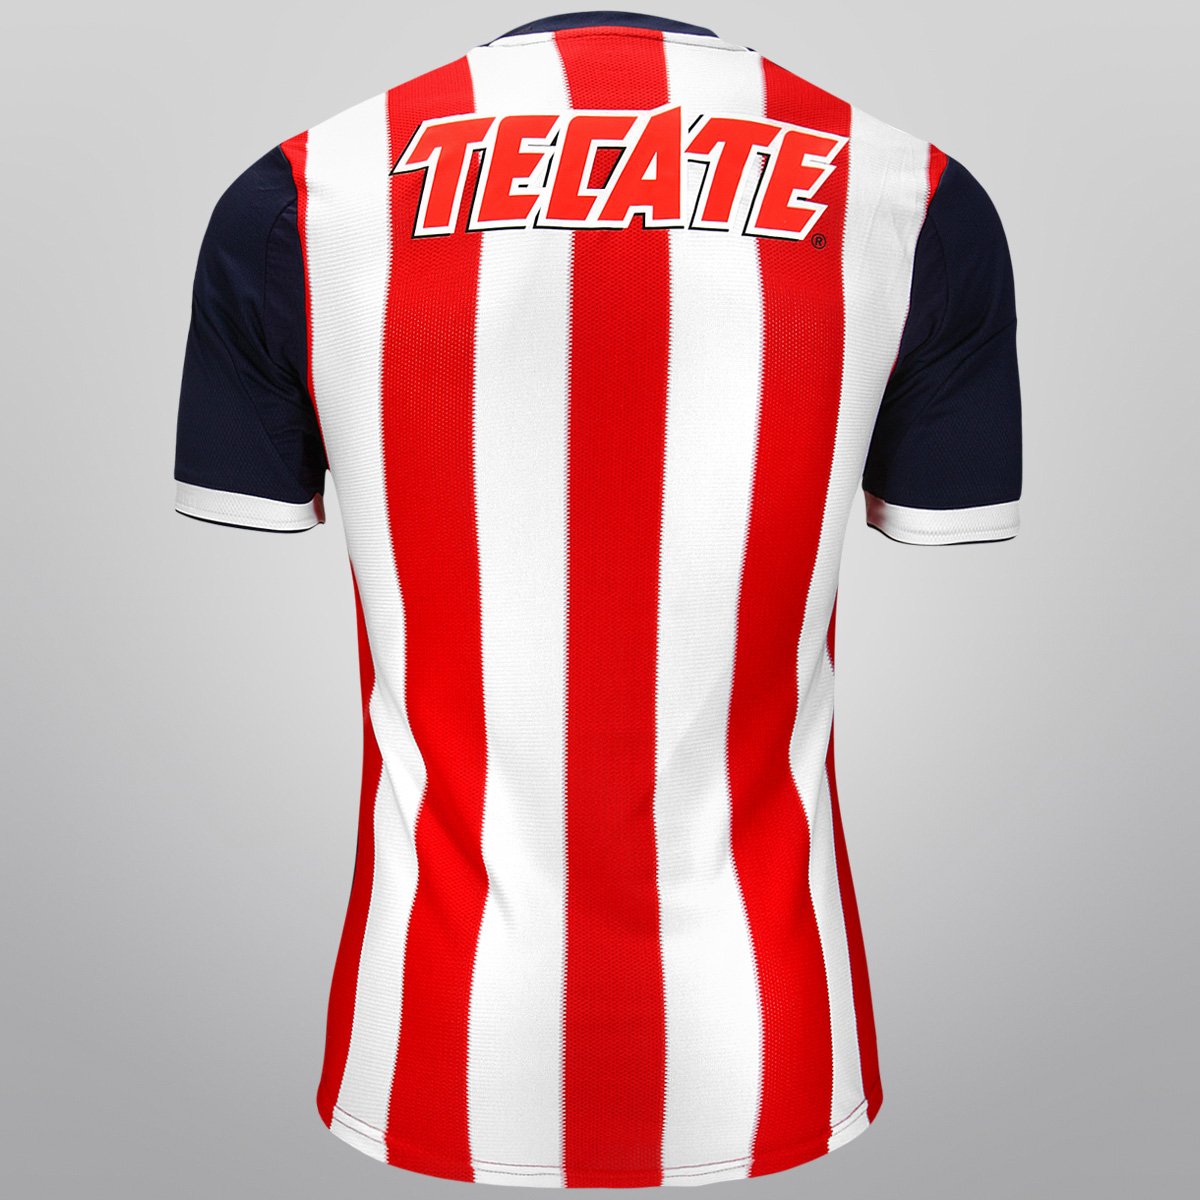 Chivas 13-14 (2013-14) Home Kit -